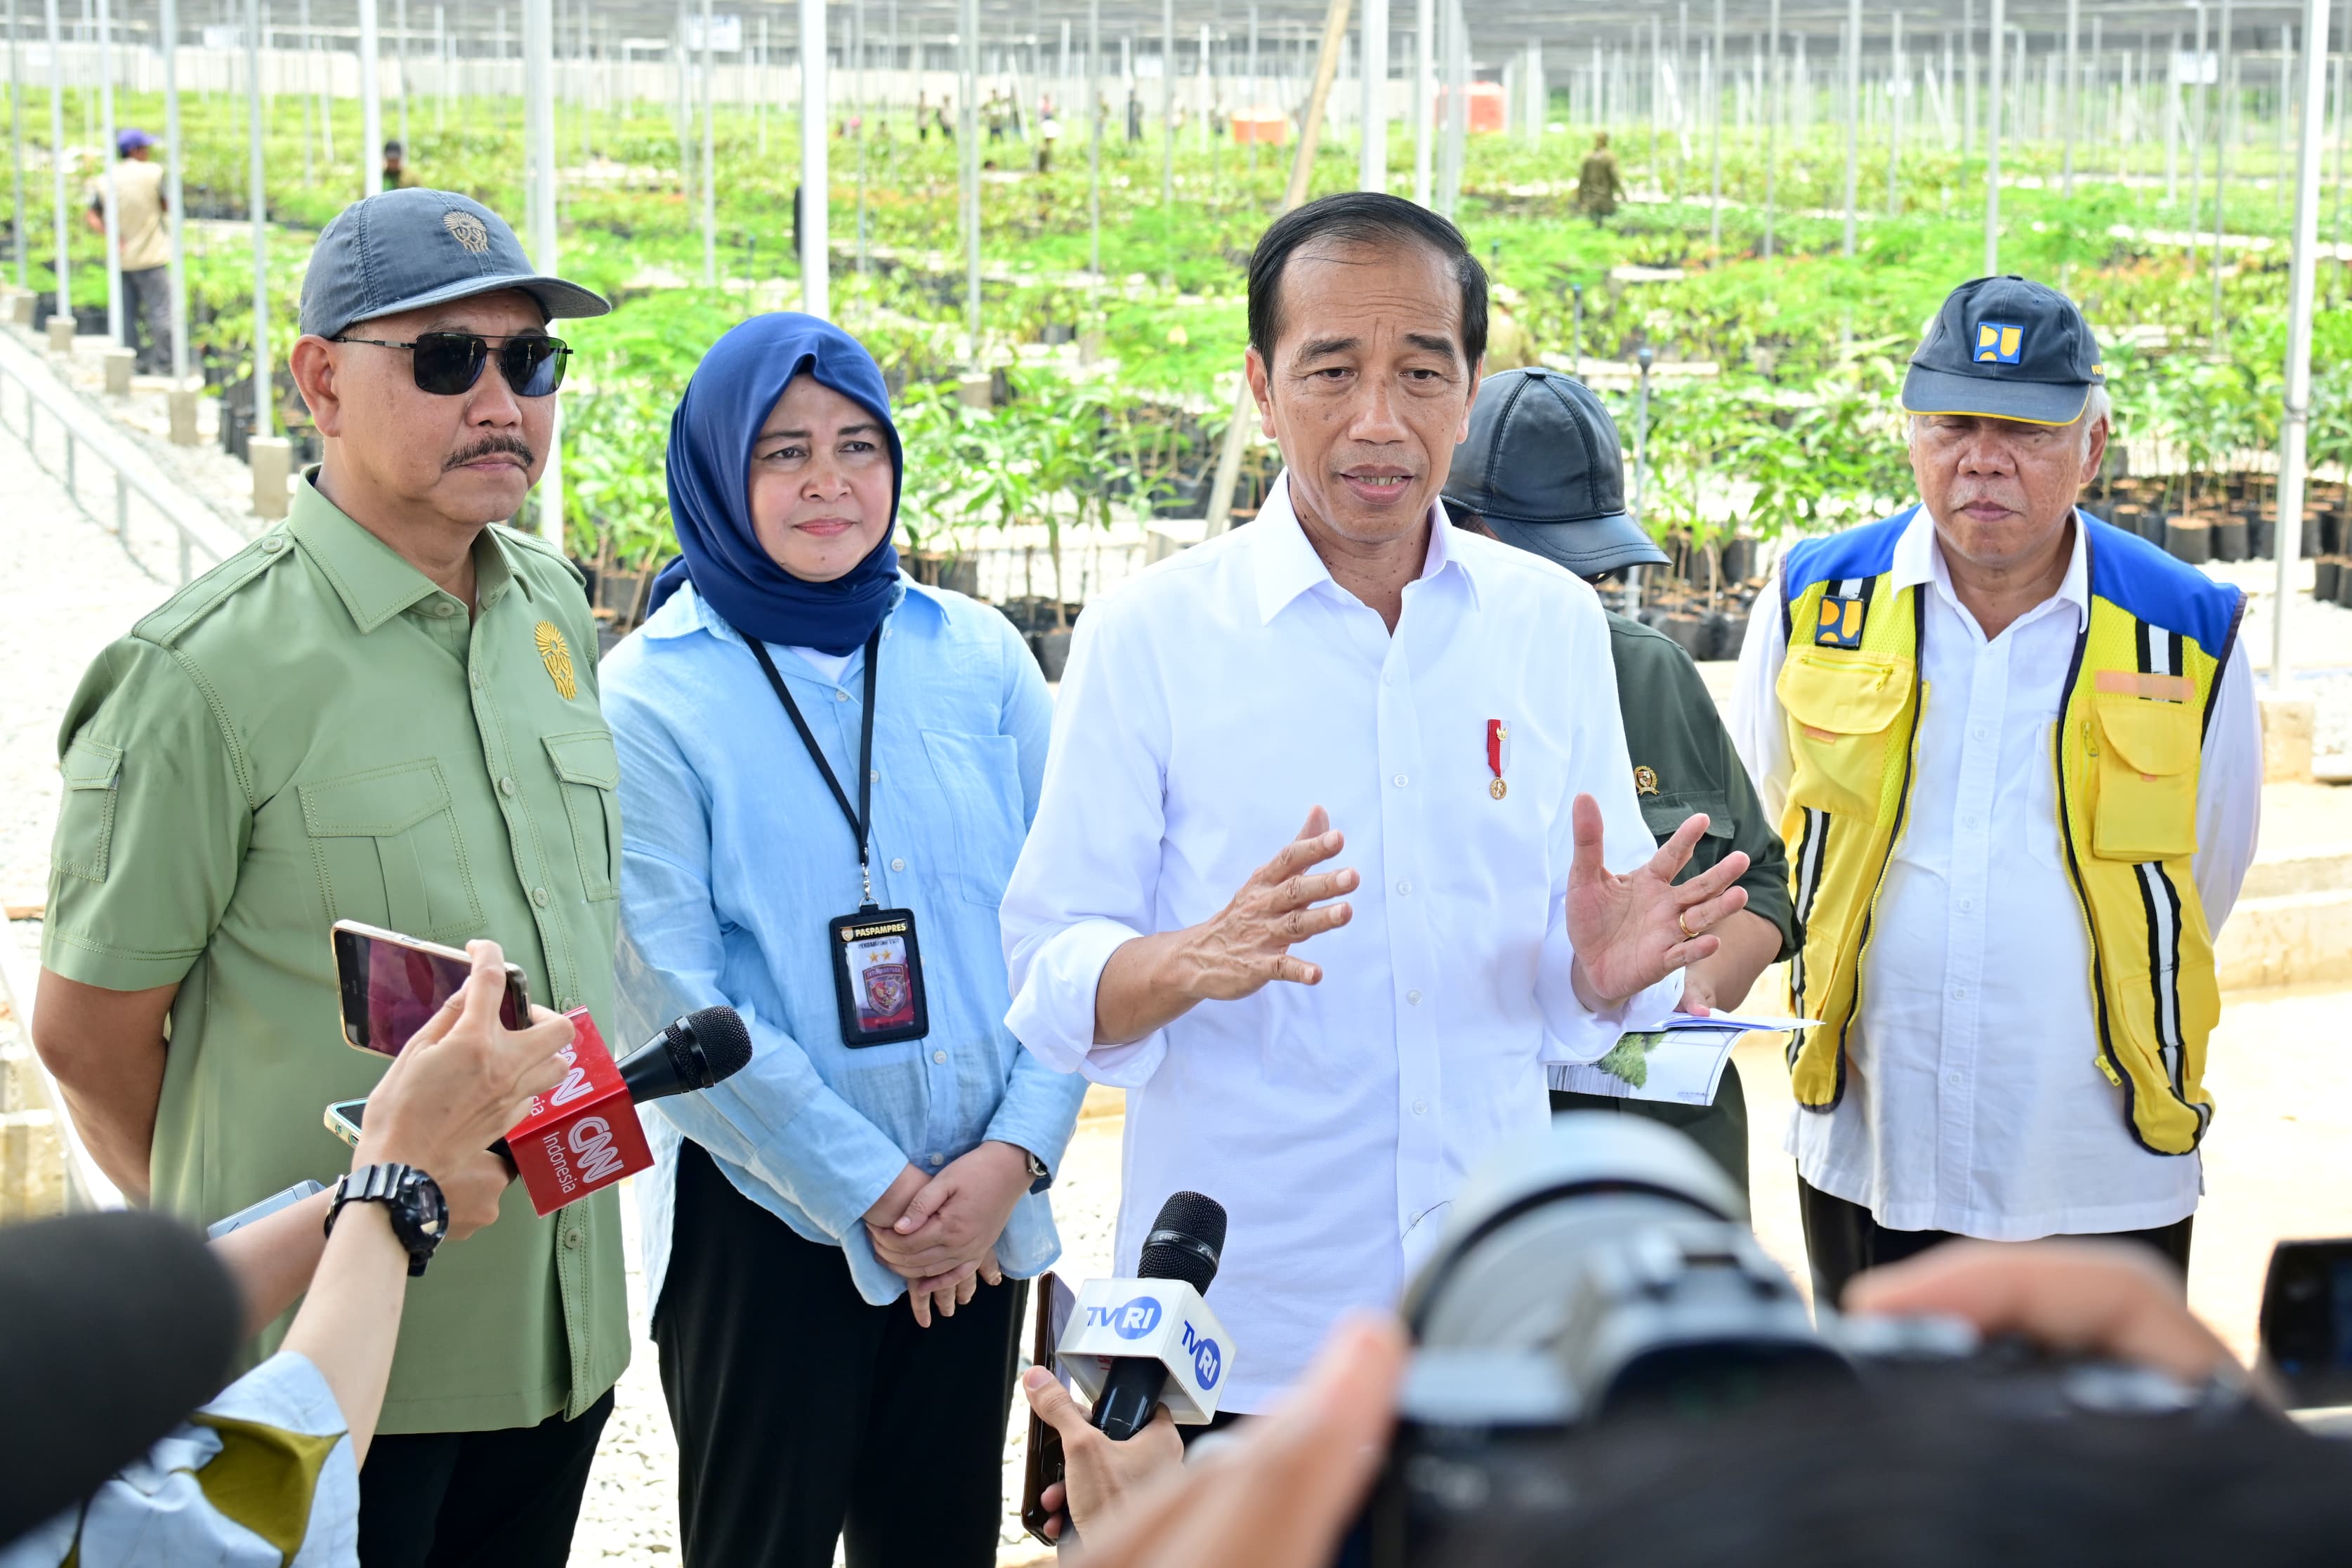 KPK Jemput Paksa SYL, Jokowi: Pasti Ada Alasannya